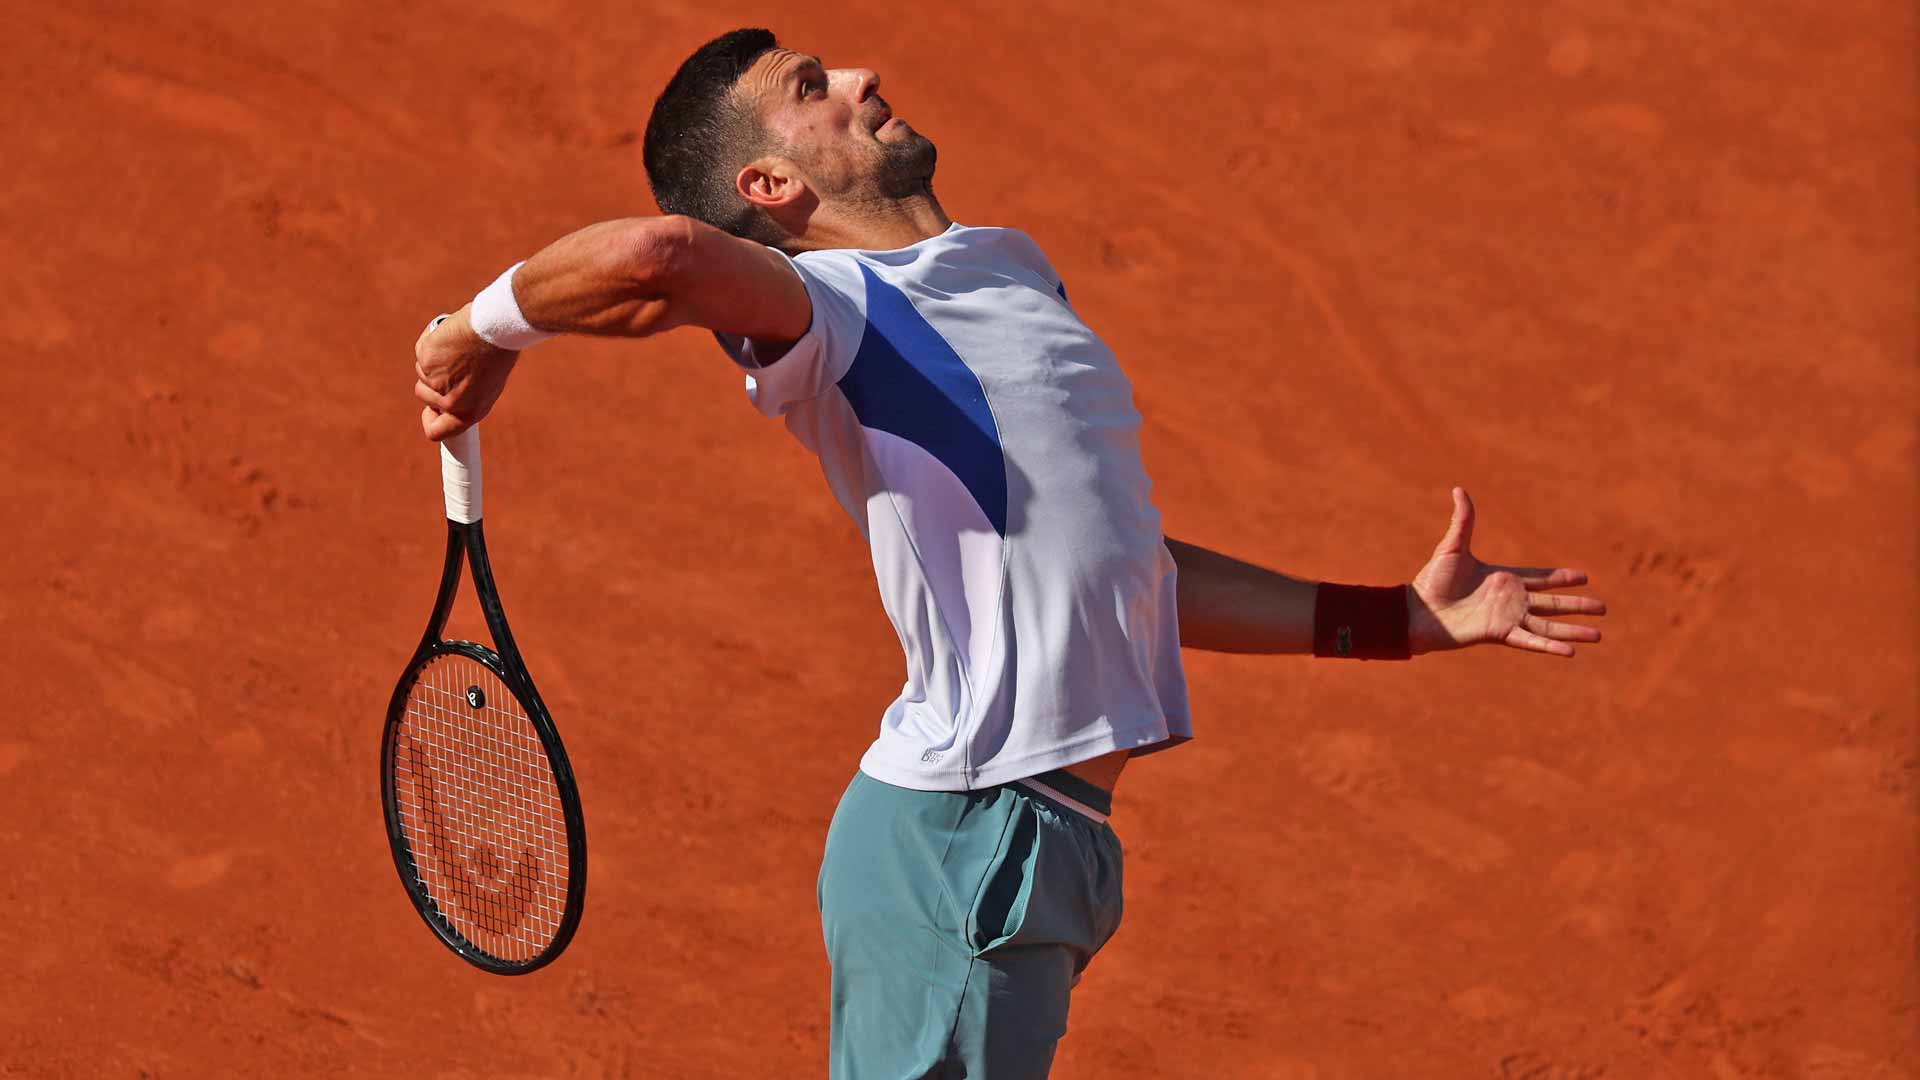 Djokovic's Roland Garros mindset: 'Low expectations & high hopes'